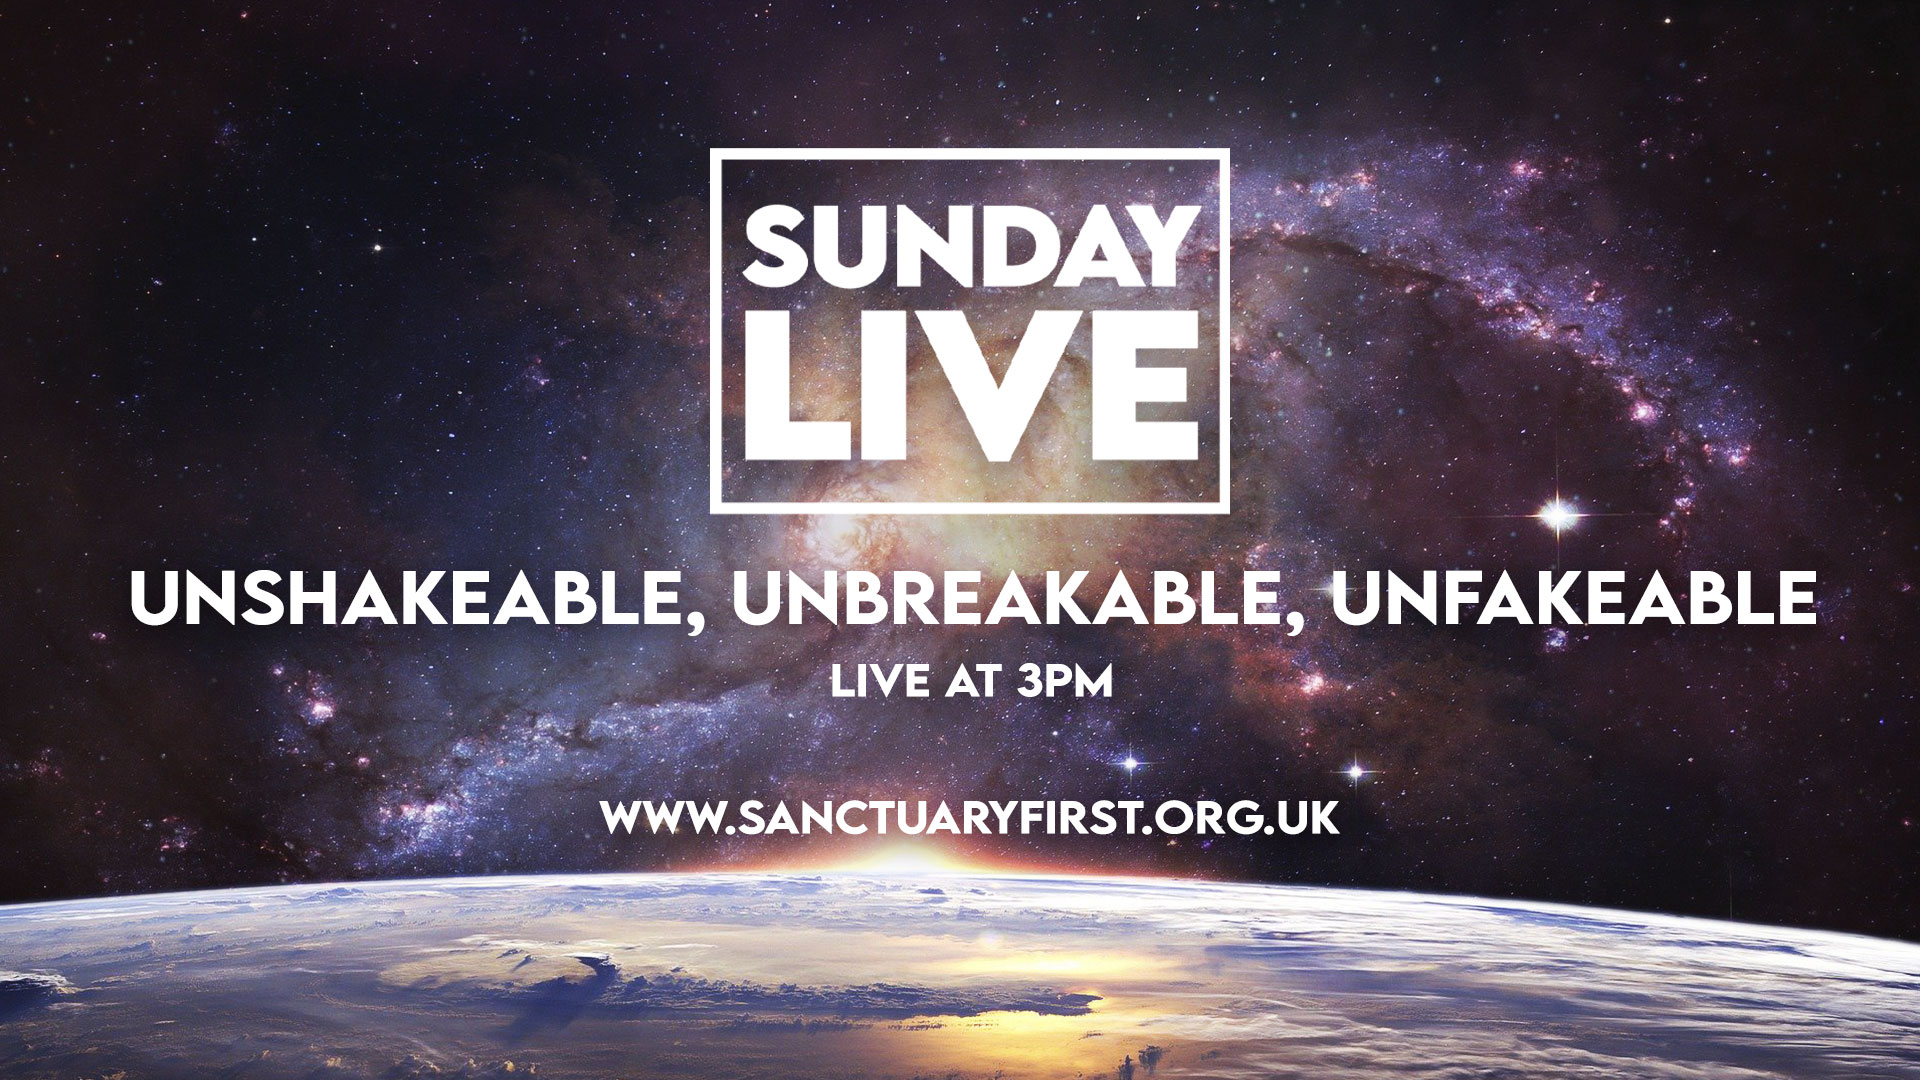 Sunday Live - Unshakeable, unbreakable, unfakeable